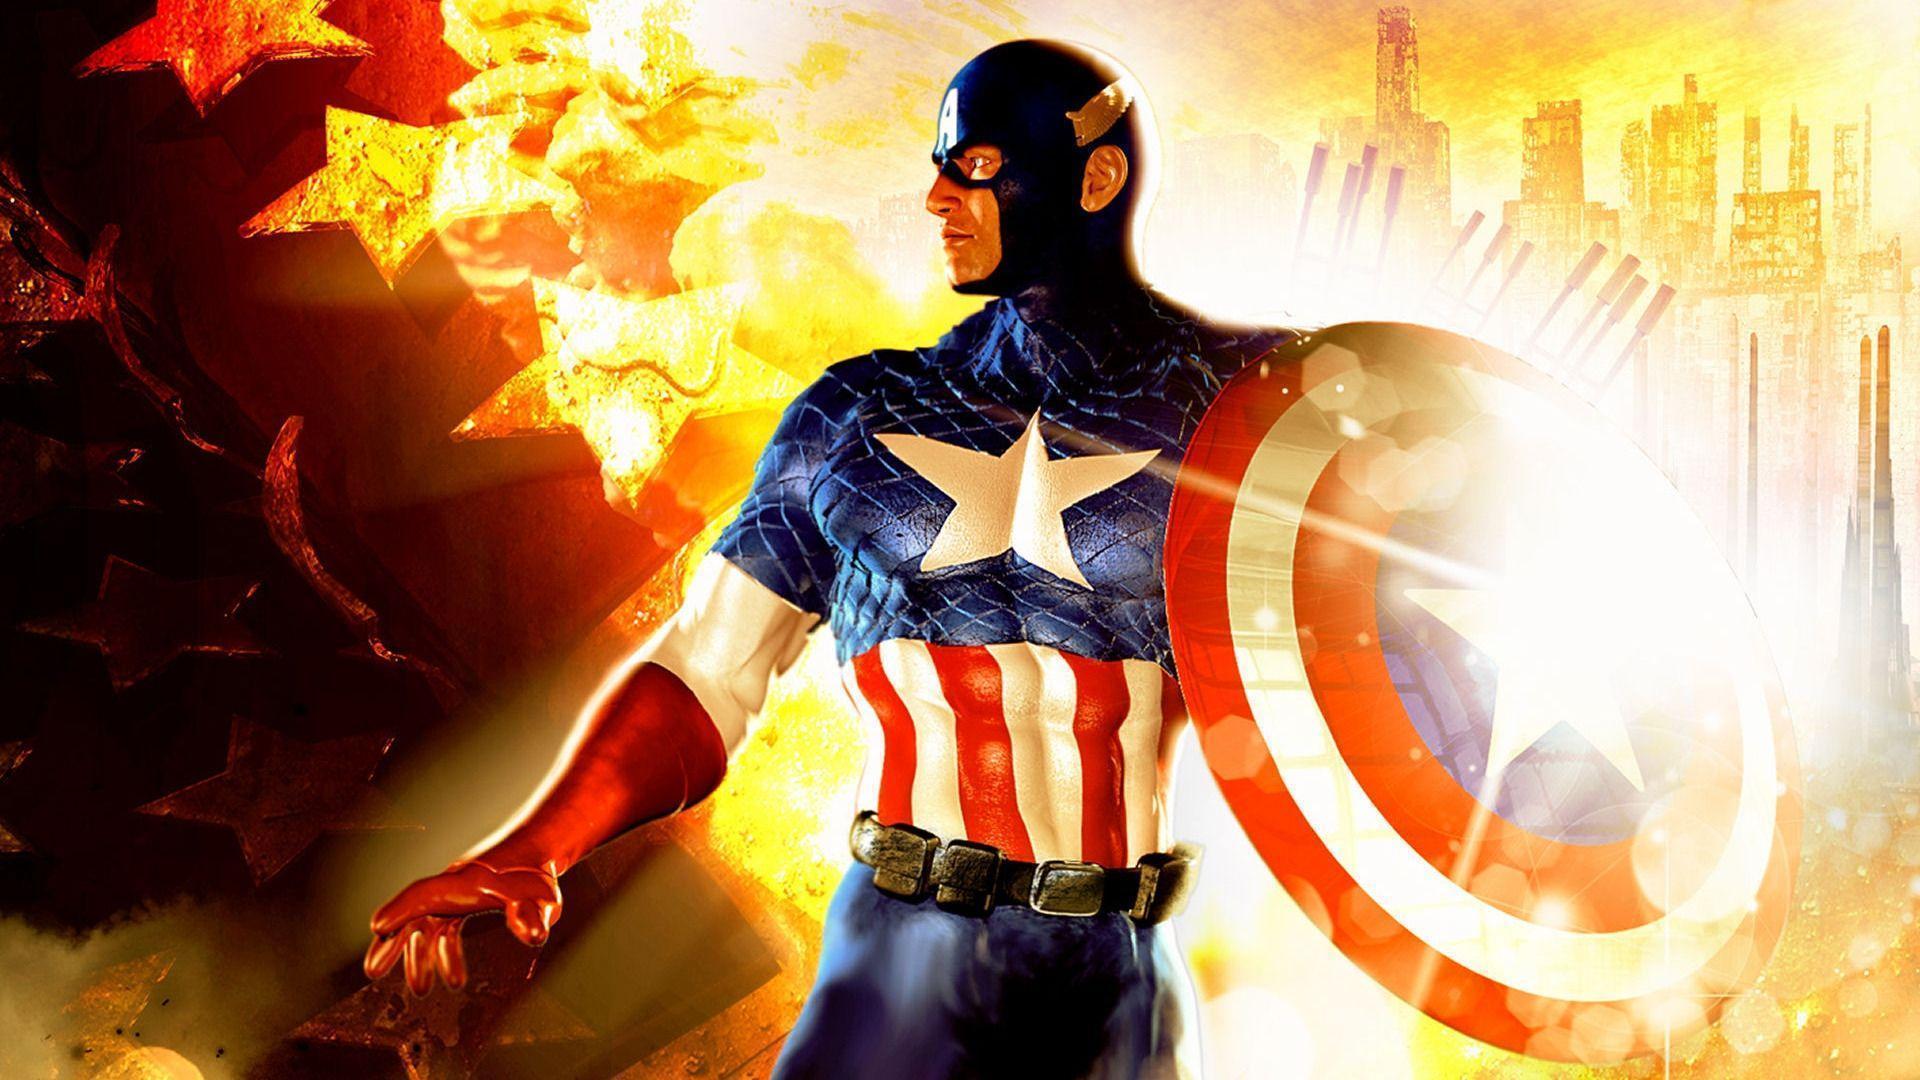 Captain America Wallpaper Free Download